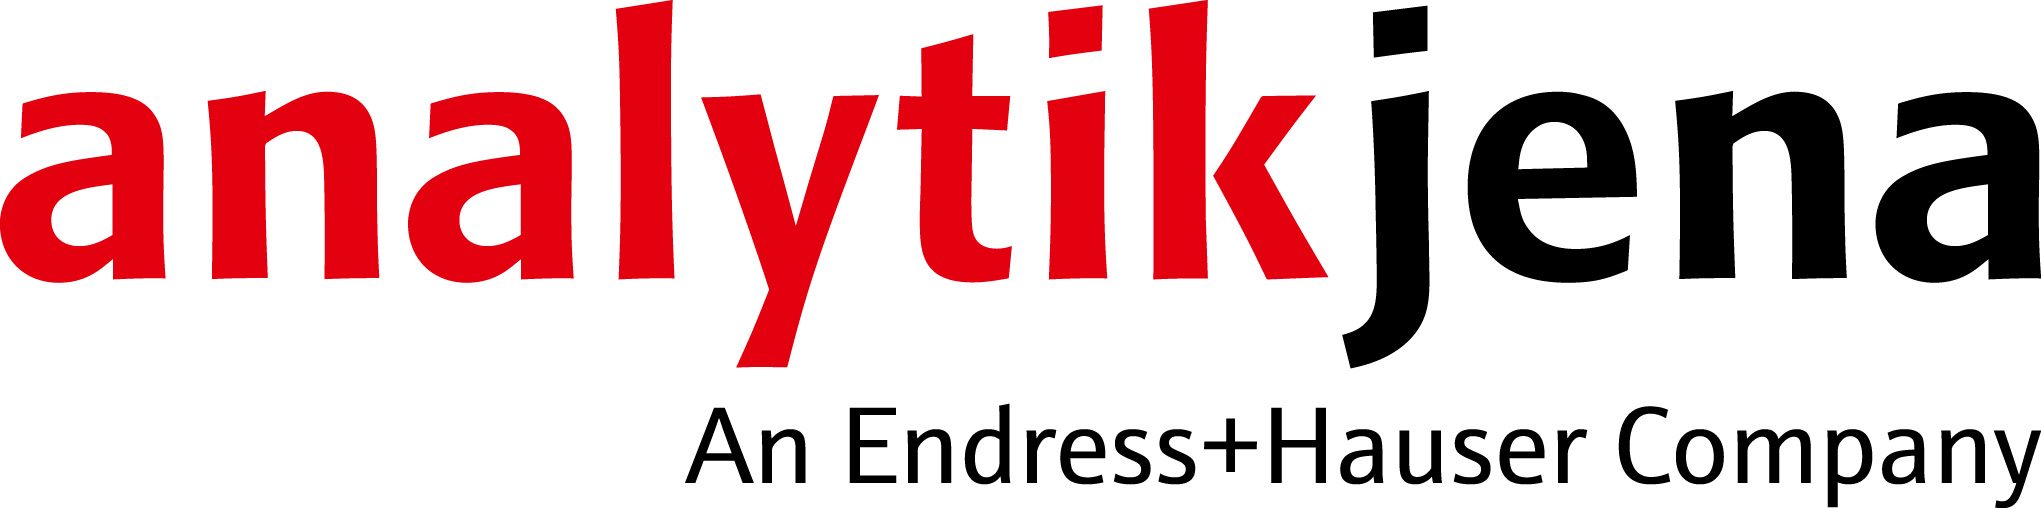 Analytik Jena GmbH logo